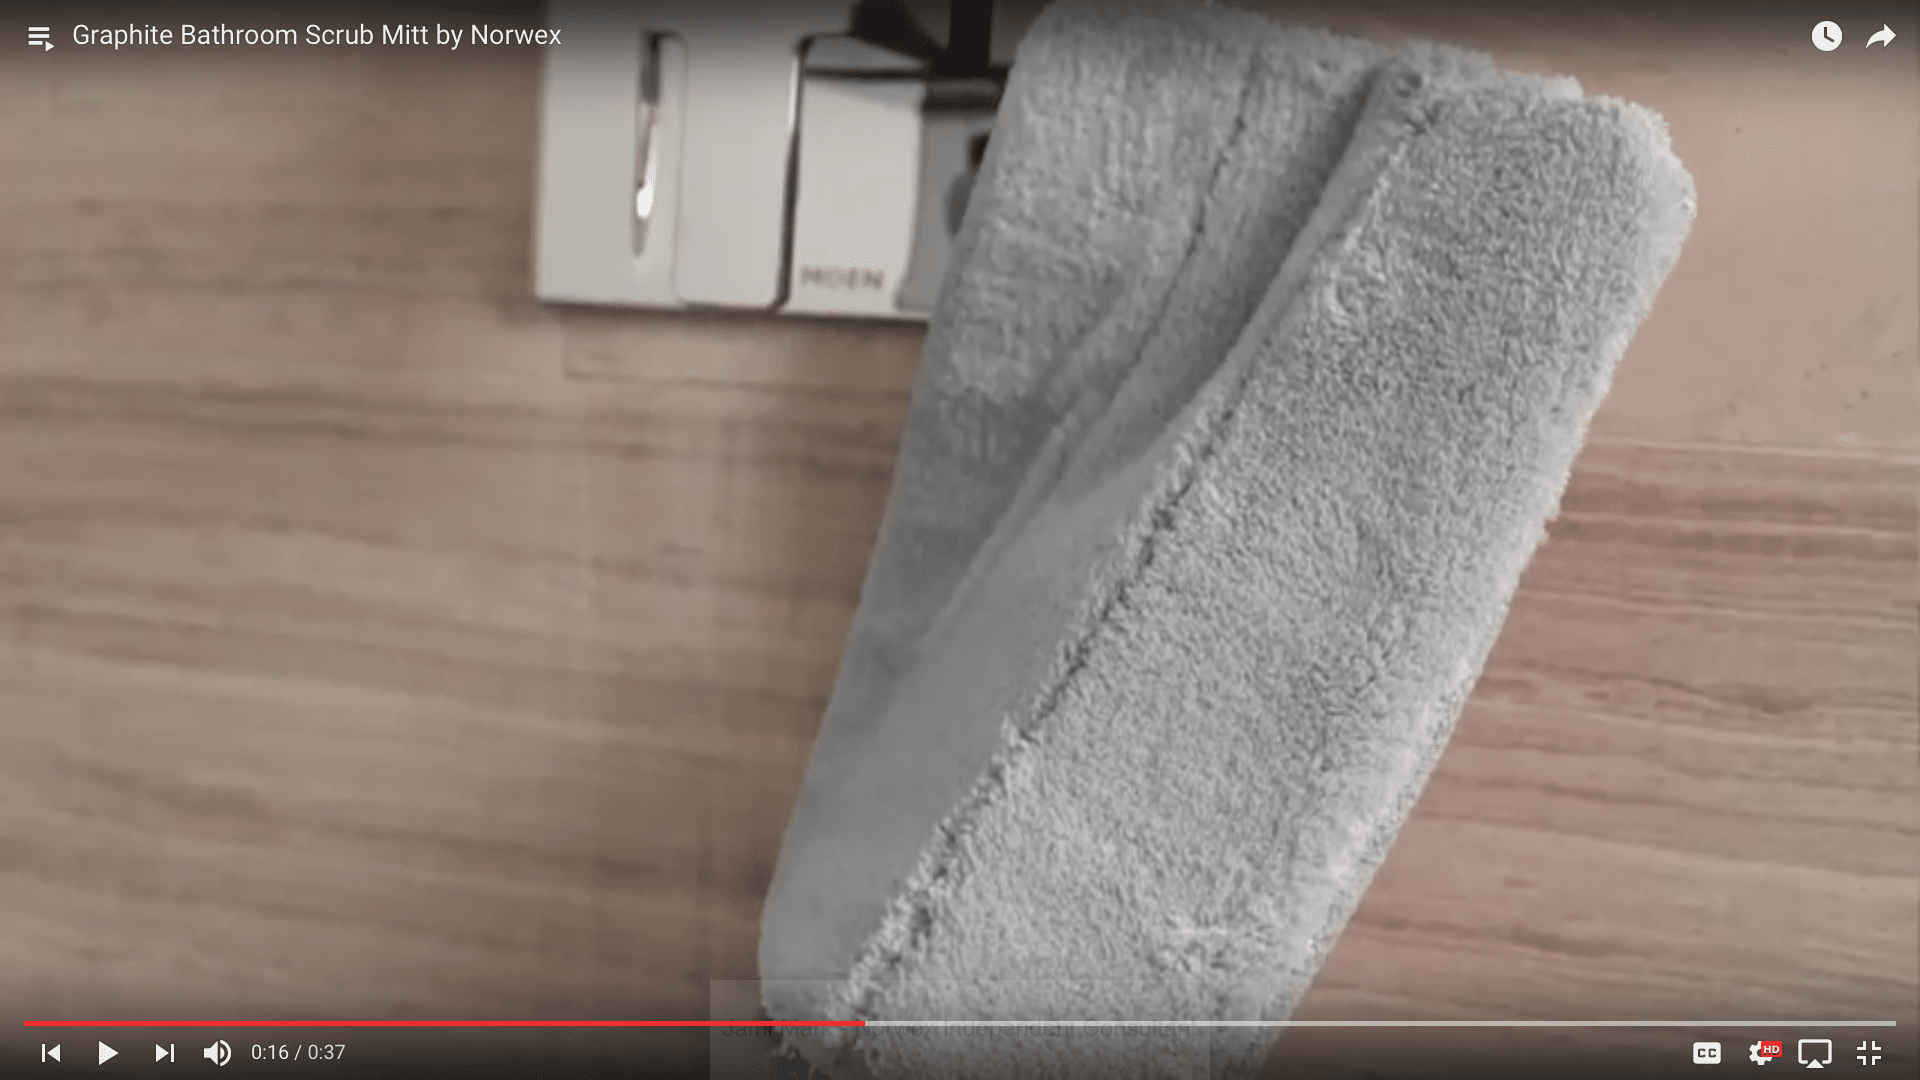 Video Norwex Graphite Bathroom Scrub Mitt